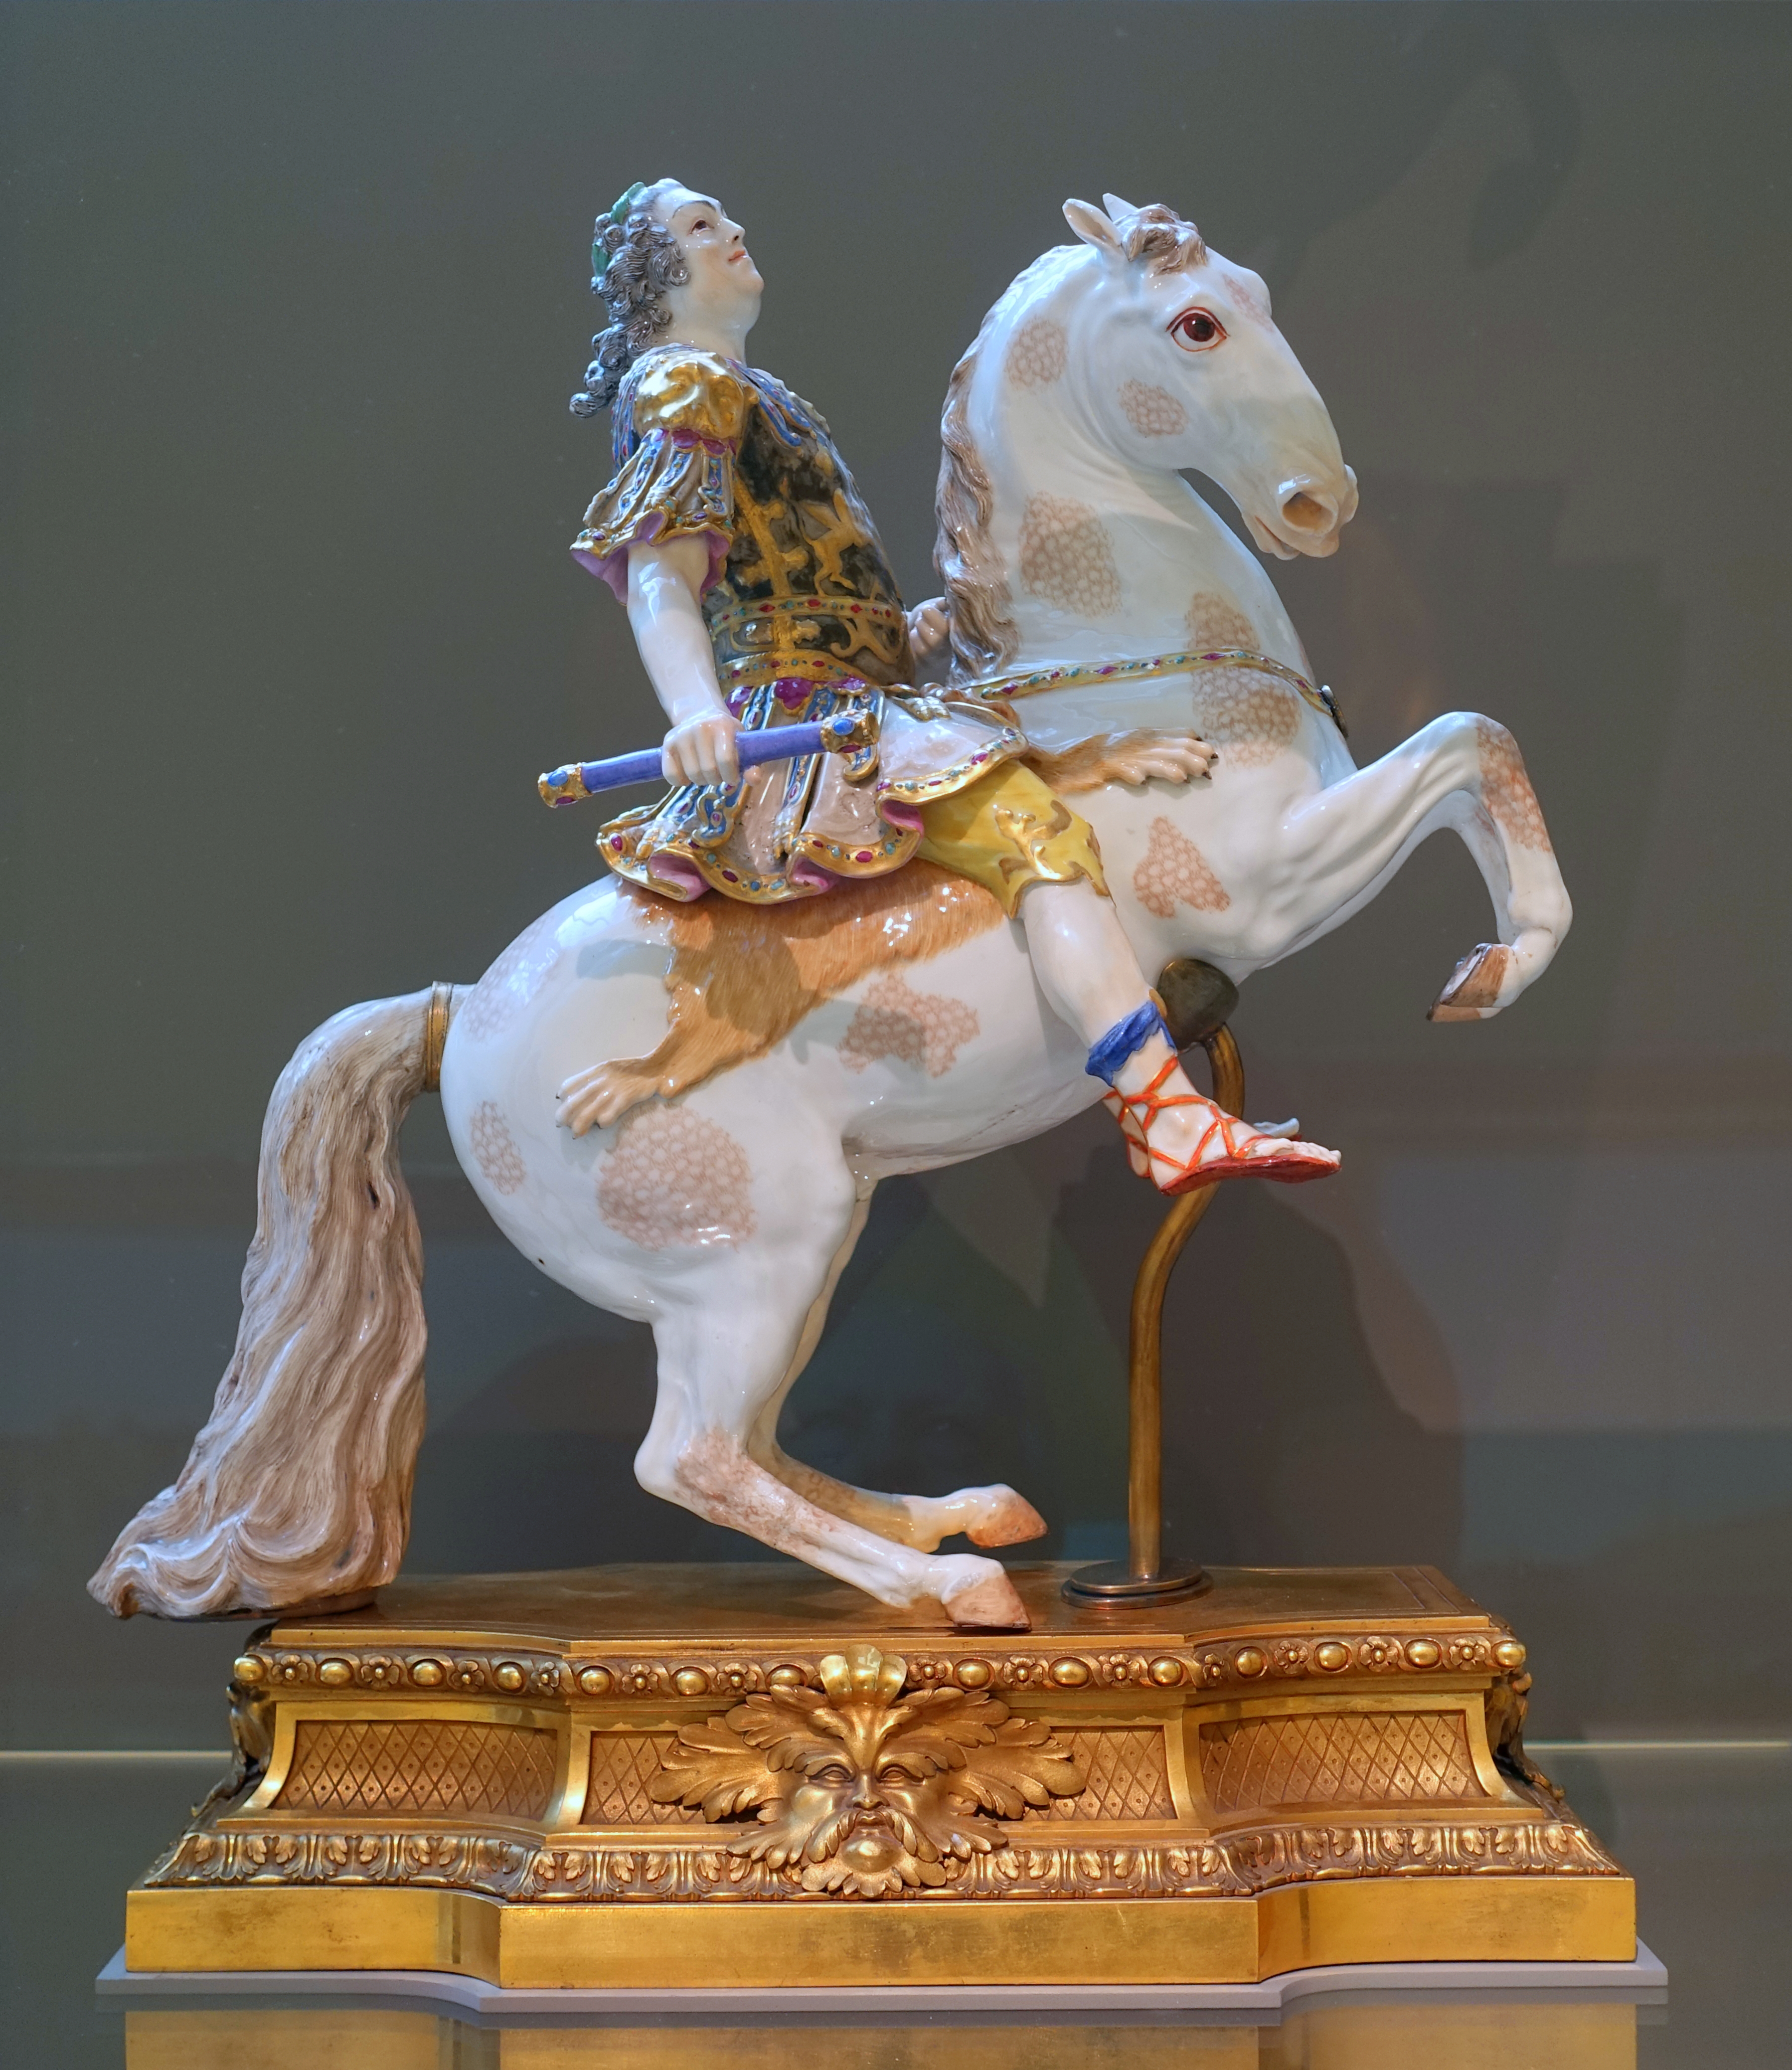 Augustus III, Johann Joachim Kaendler, Meissen Porcelain Factory, c. 1753, hard-paste porcelain - Wadsworth Atheneum - Hartford, CT - DSC05283